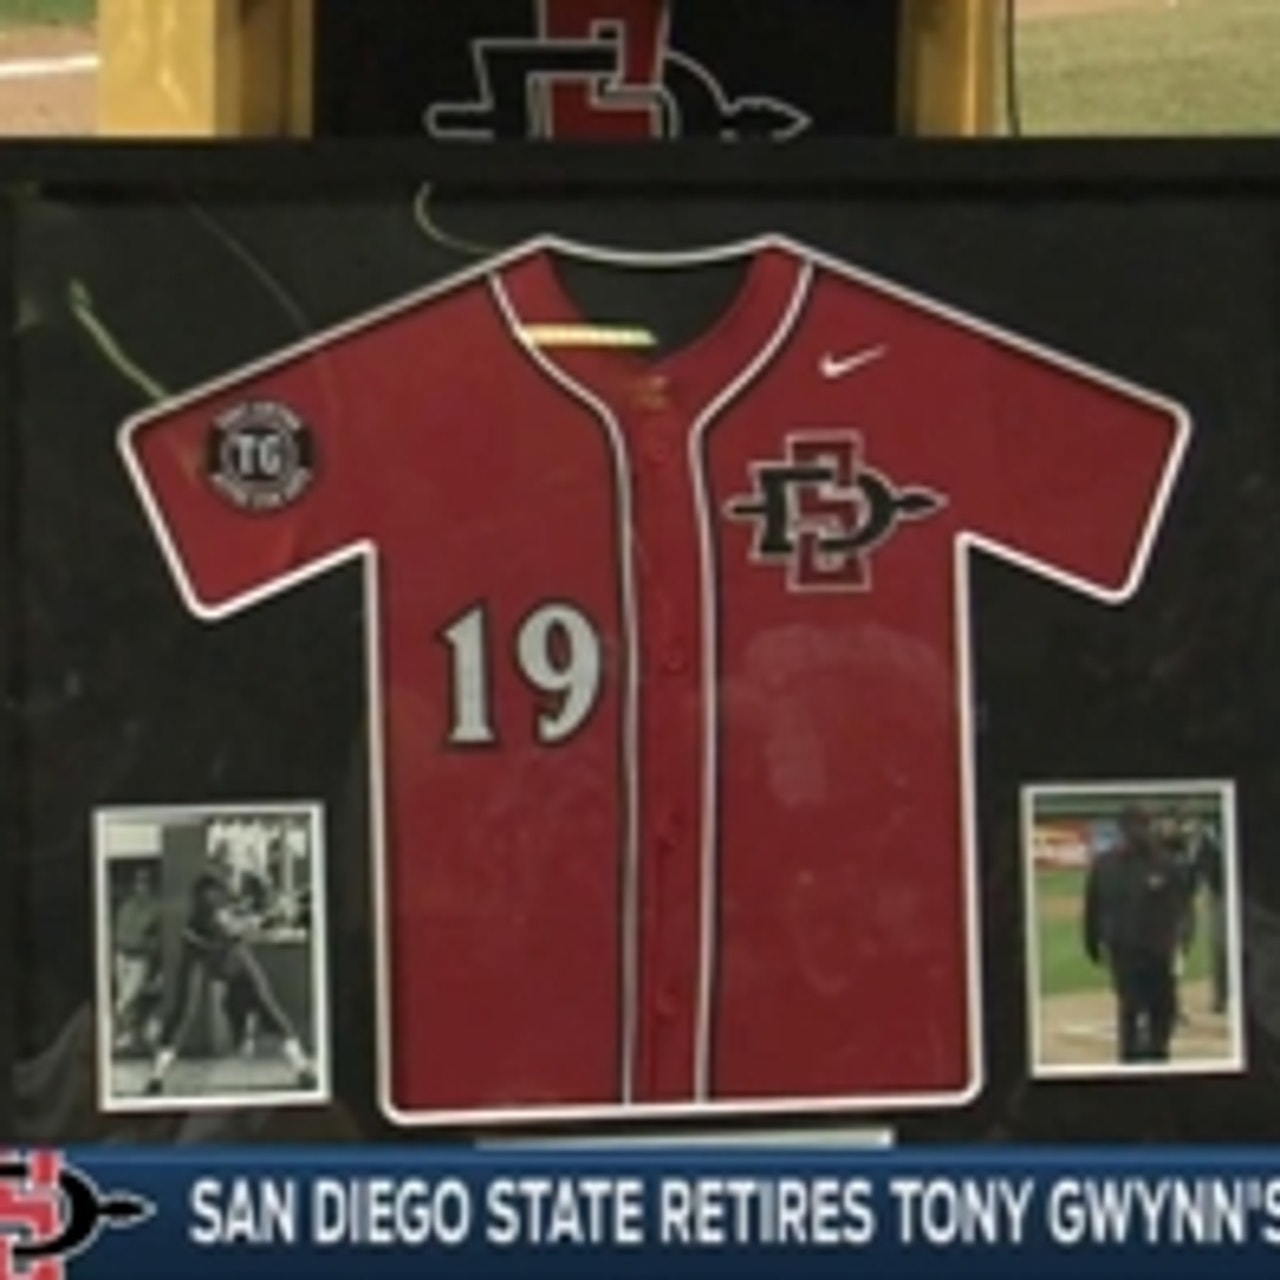 San Diego State retires Tony Gwynn's jersey